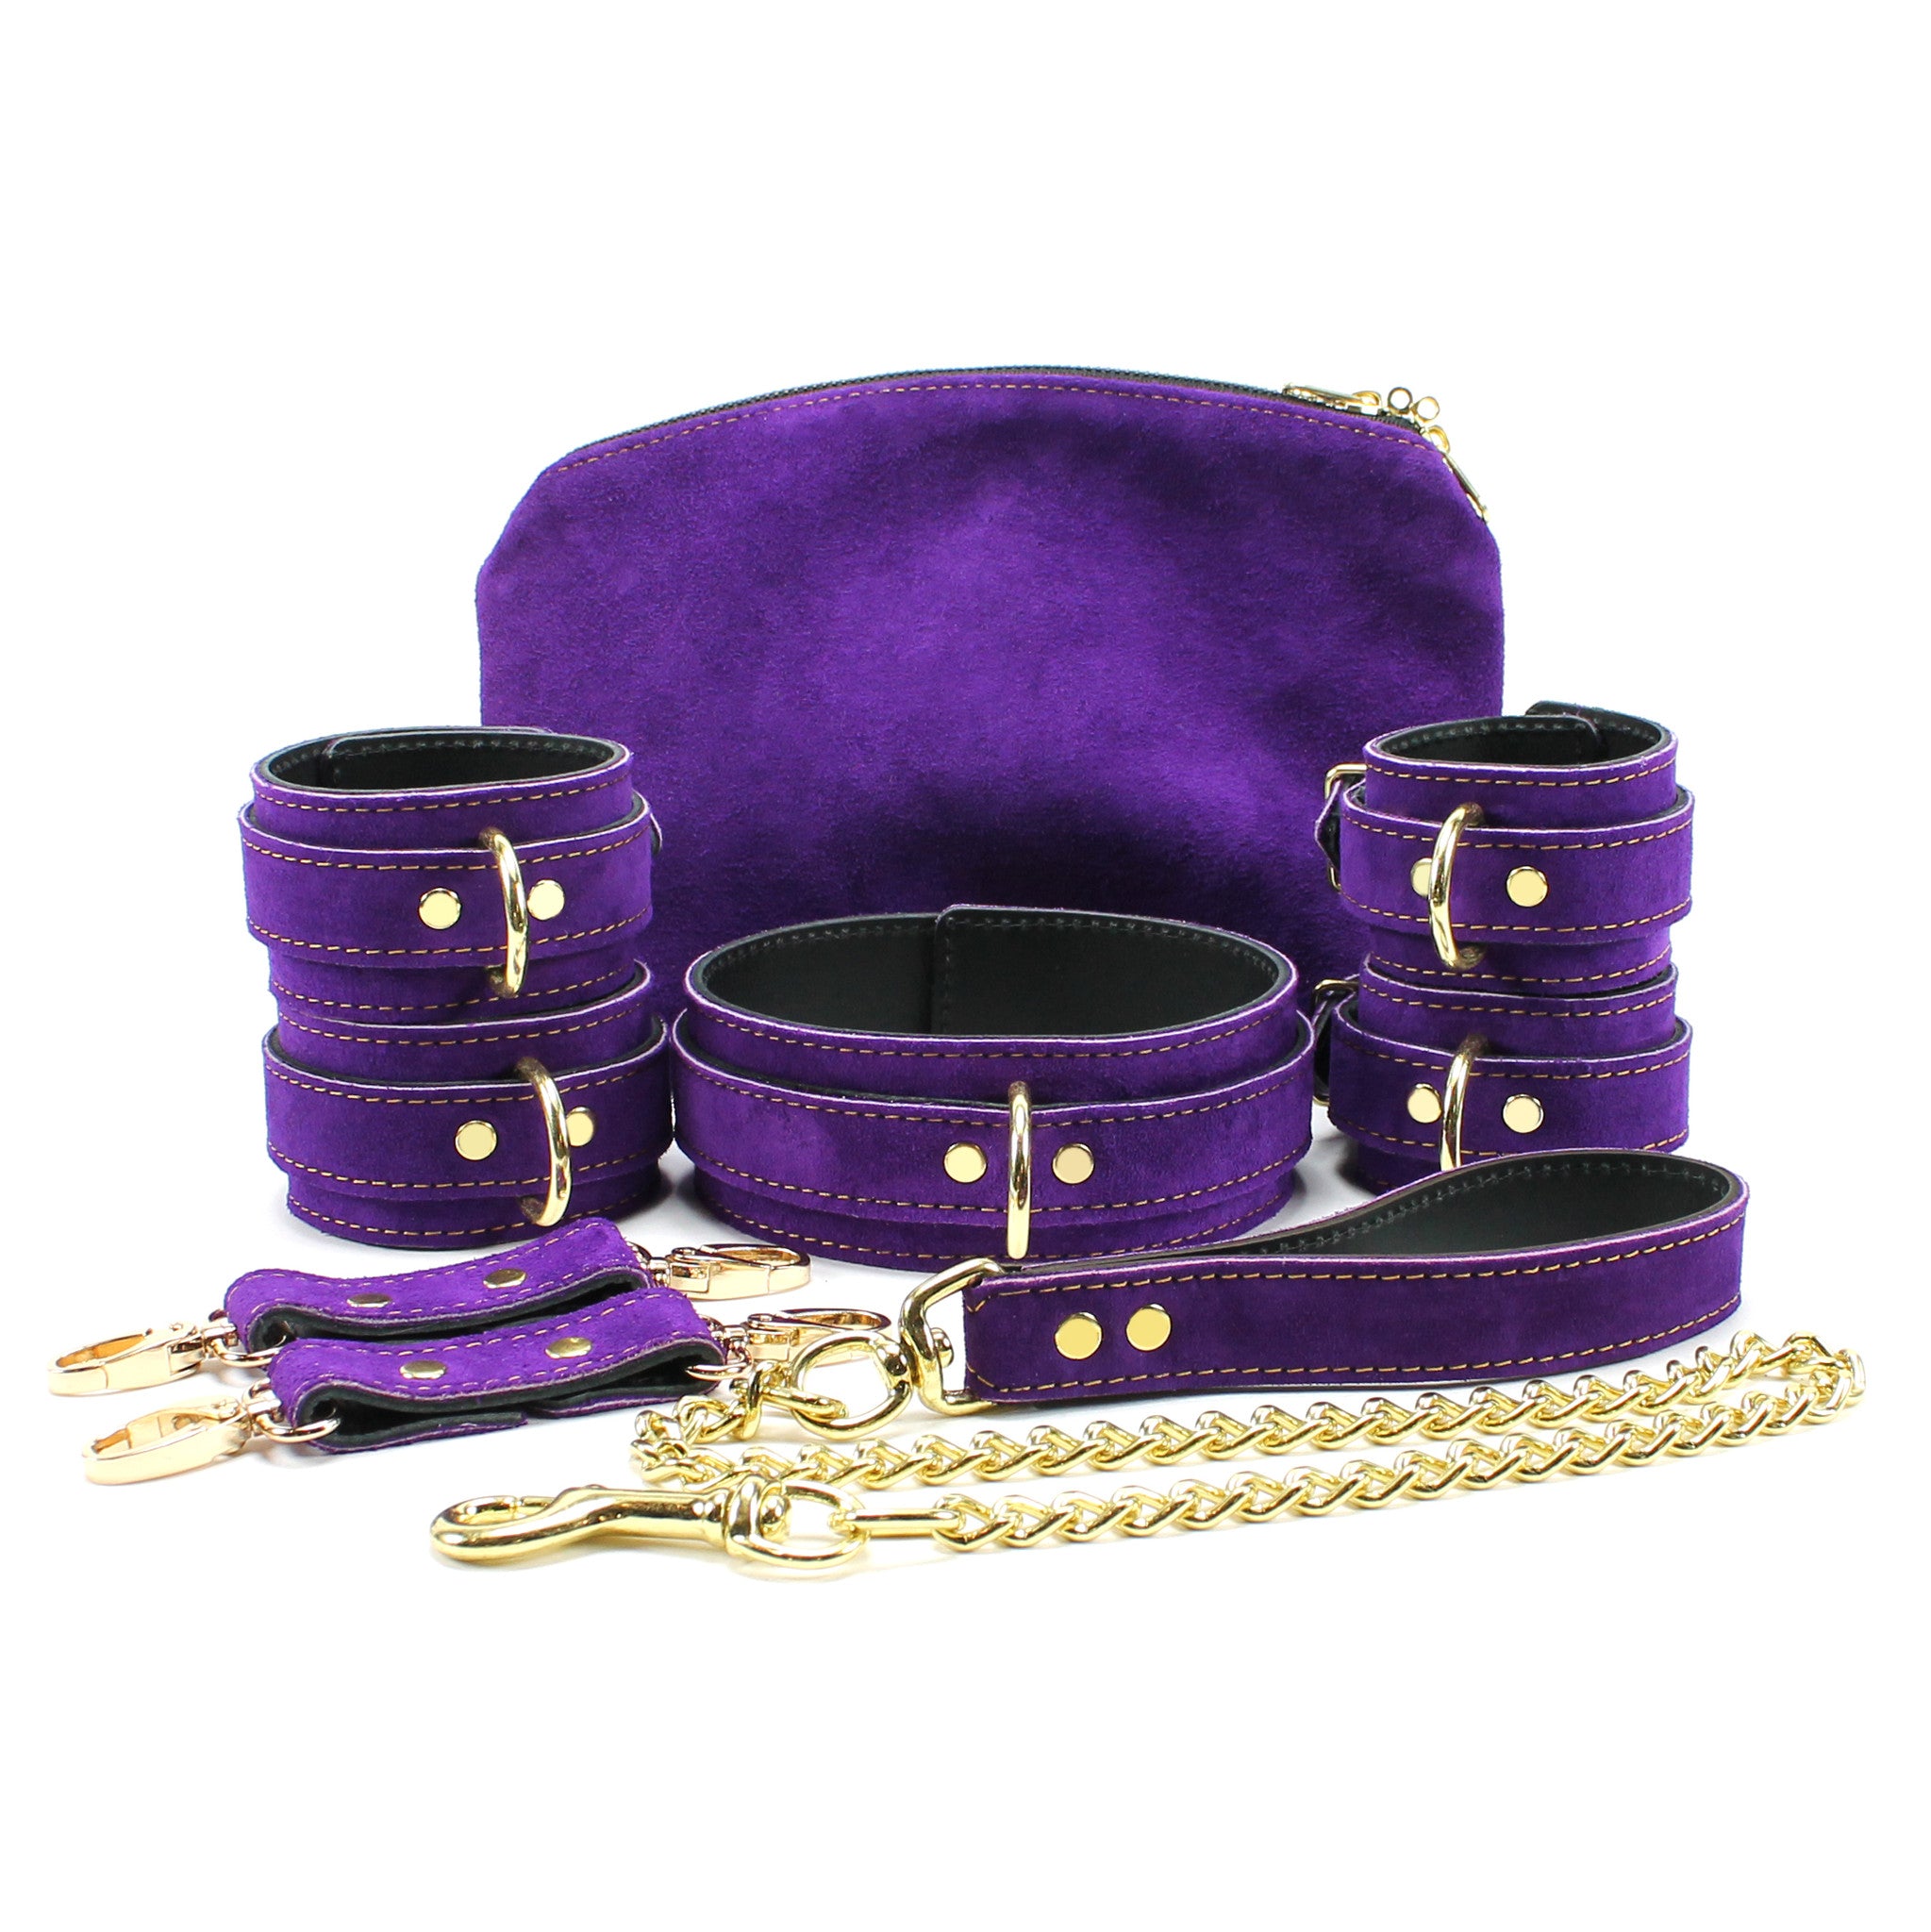 Buy Shibari Leather Bondage Thong - Purple from MEO